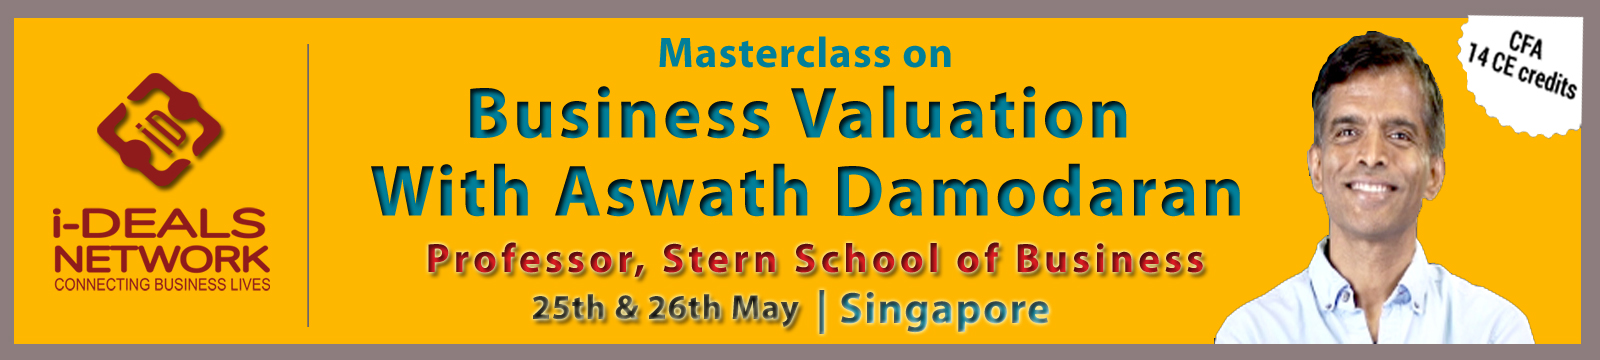 Business Valuation With Aswath Damodaran - May'17